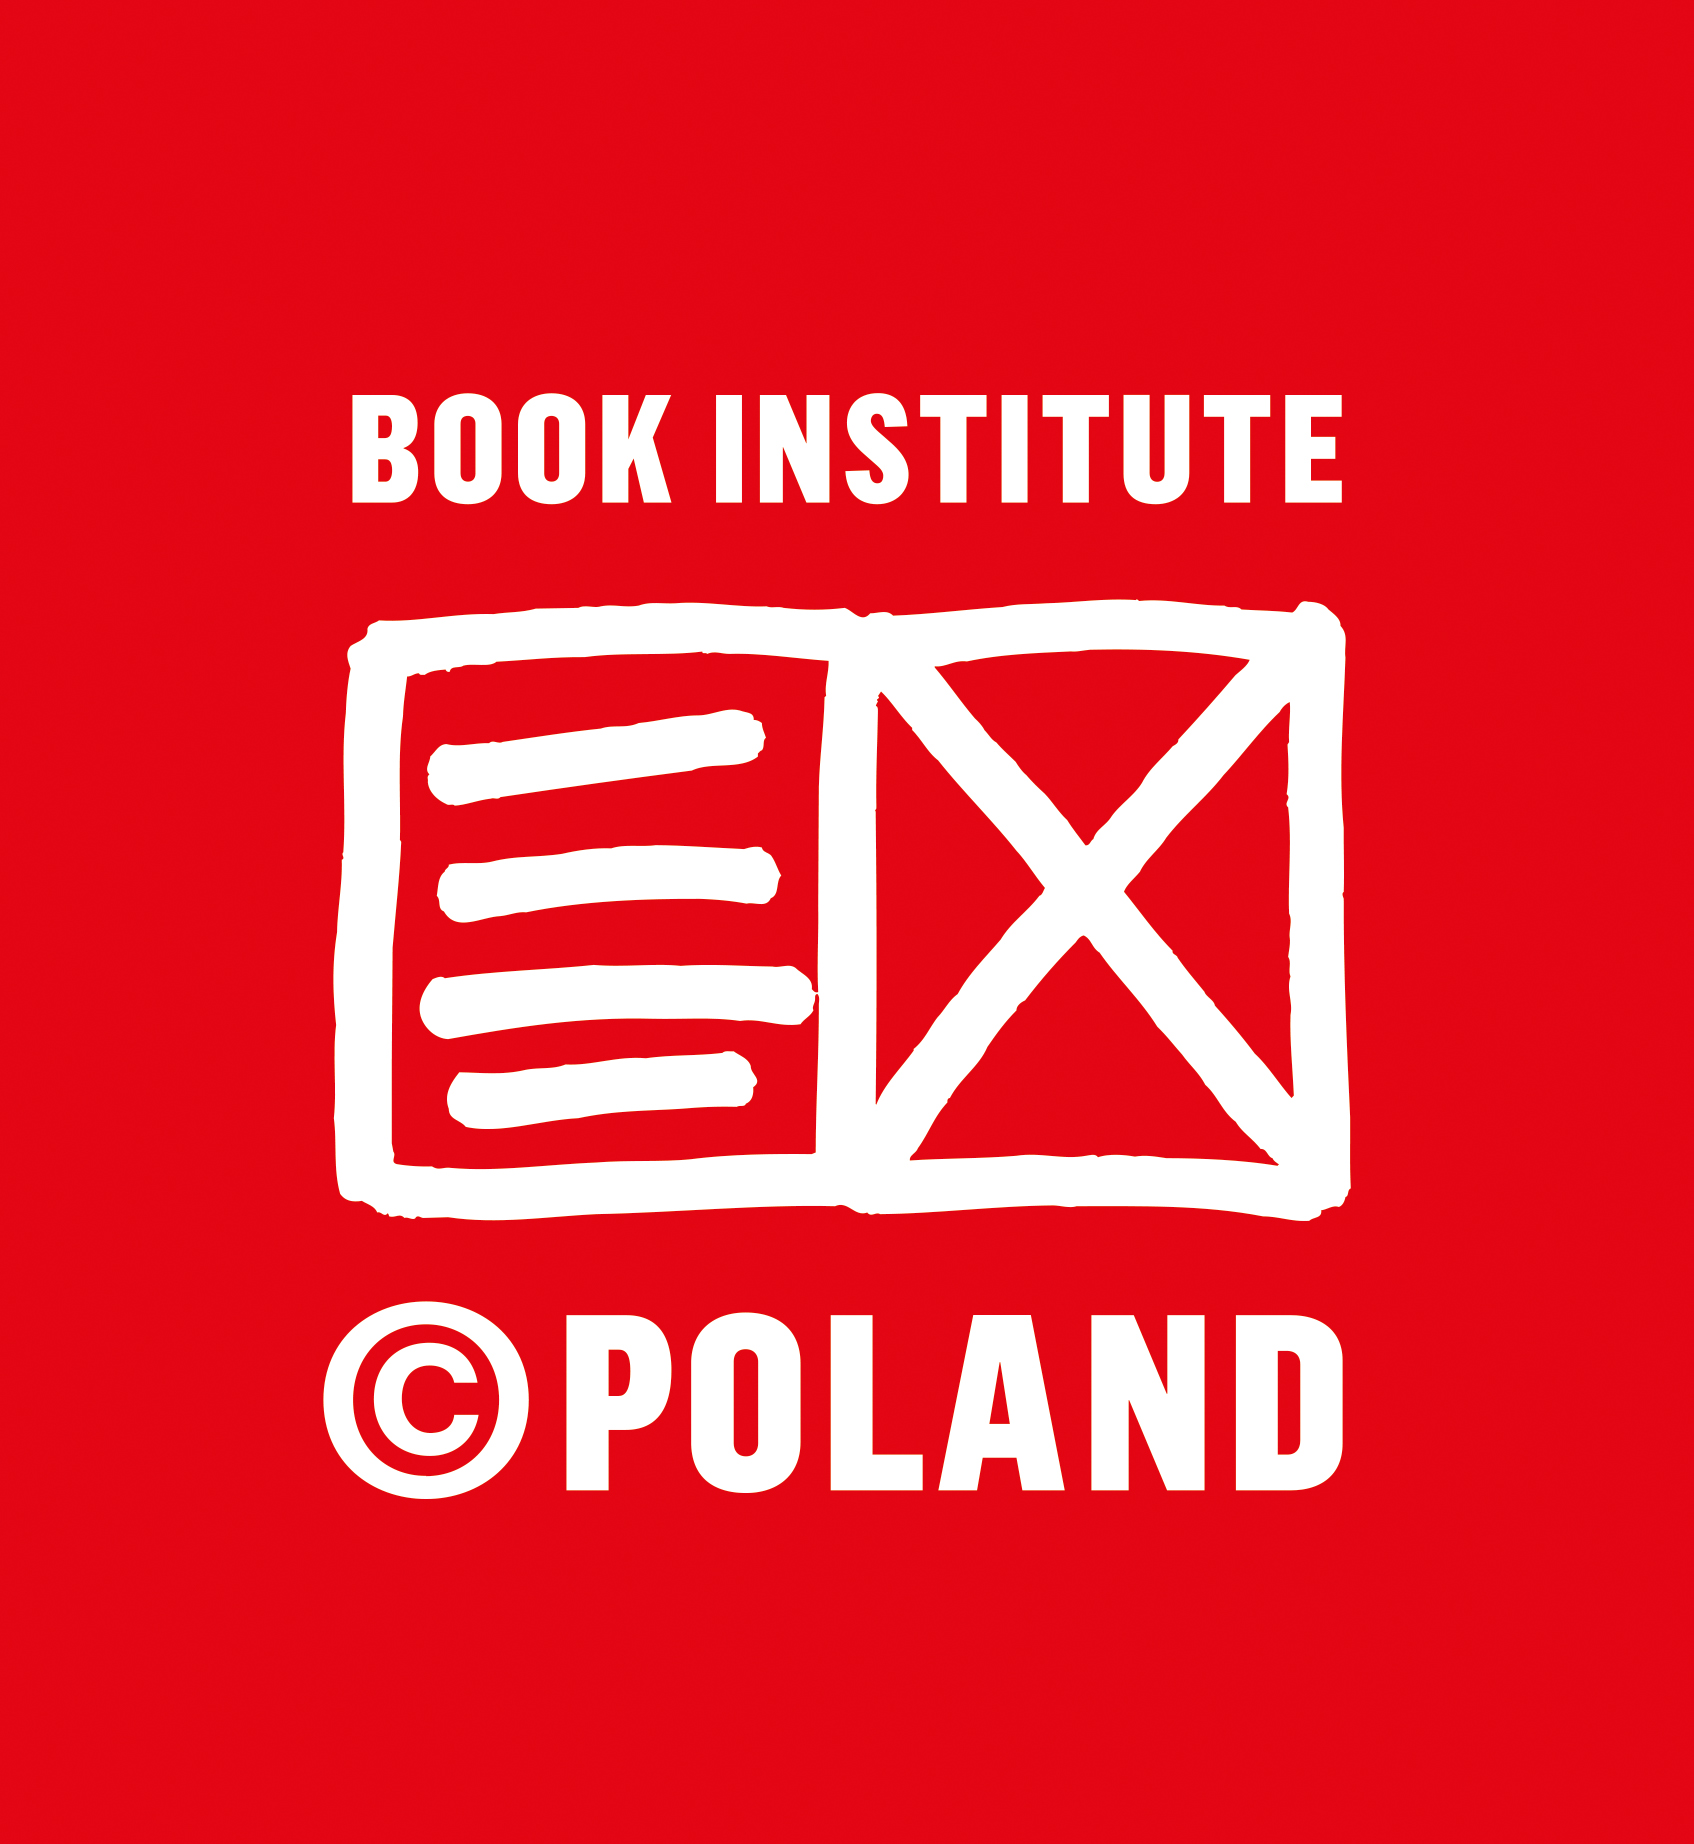 The Polish Book Institute